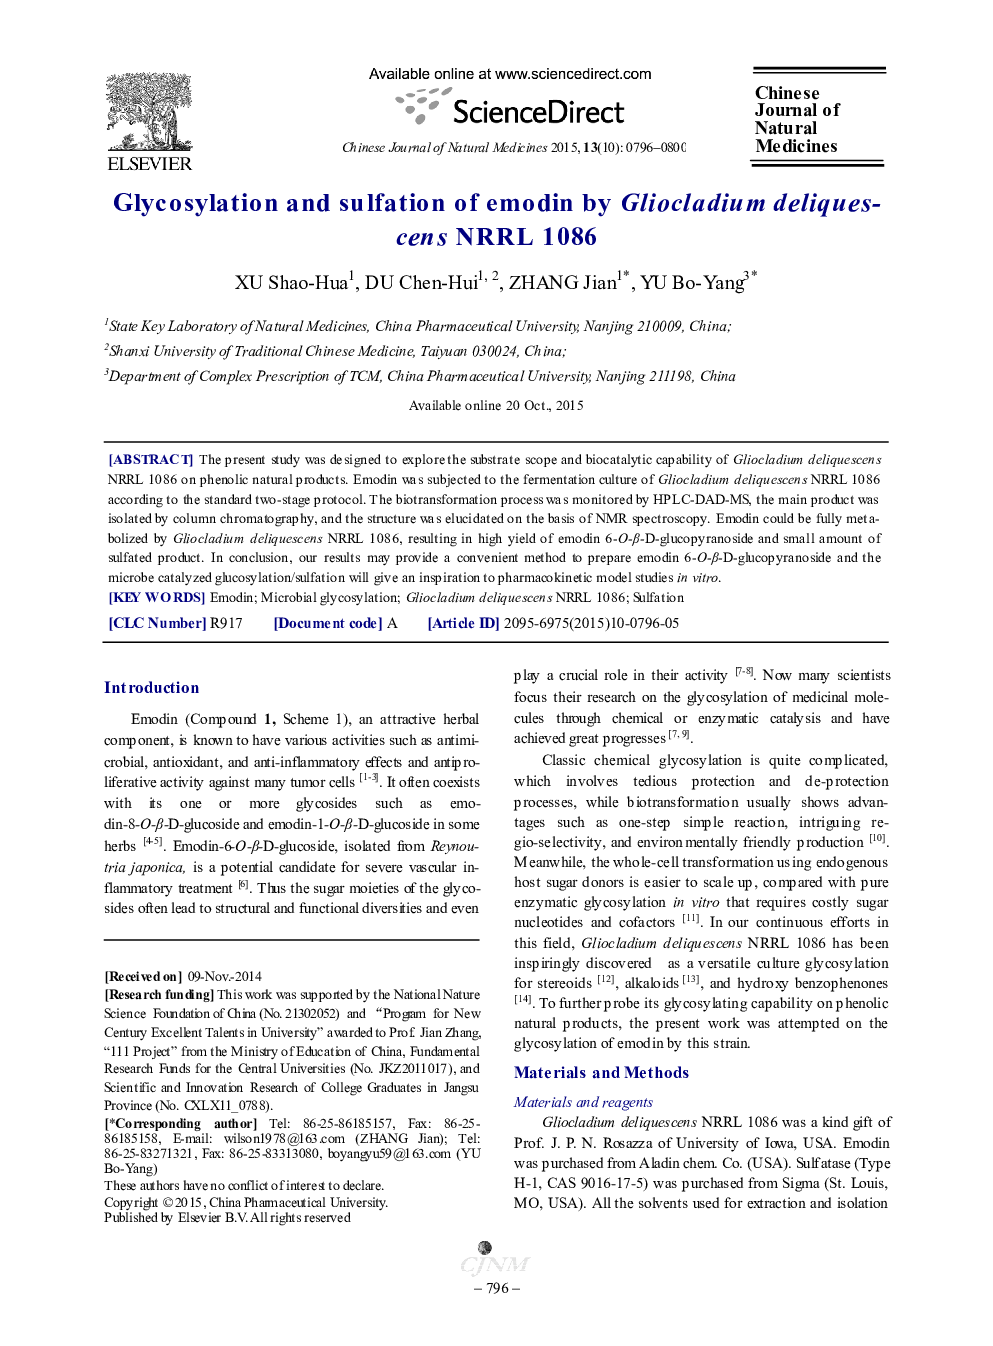 Glycosylation and sulfation of emodin by Gliocladium deliquescens NRRL 1086 